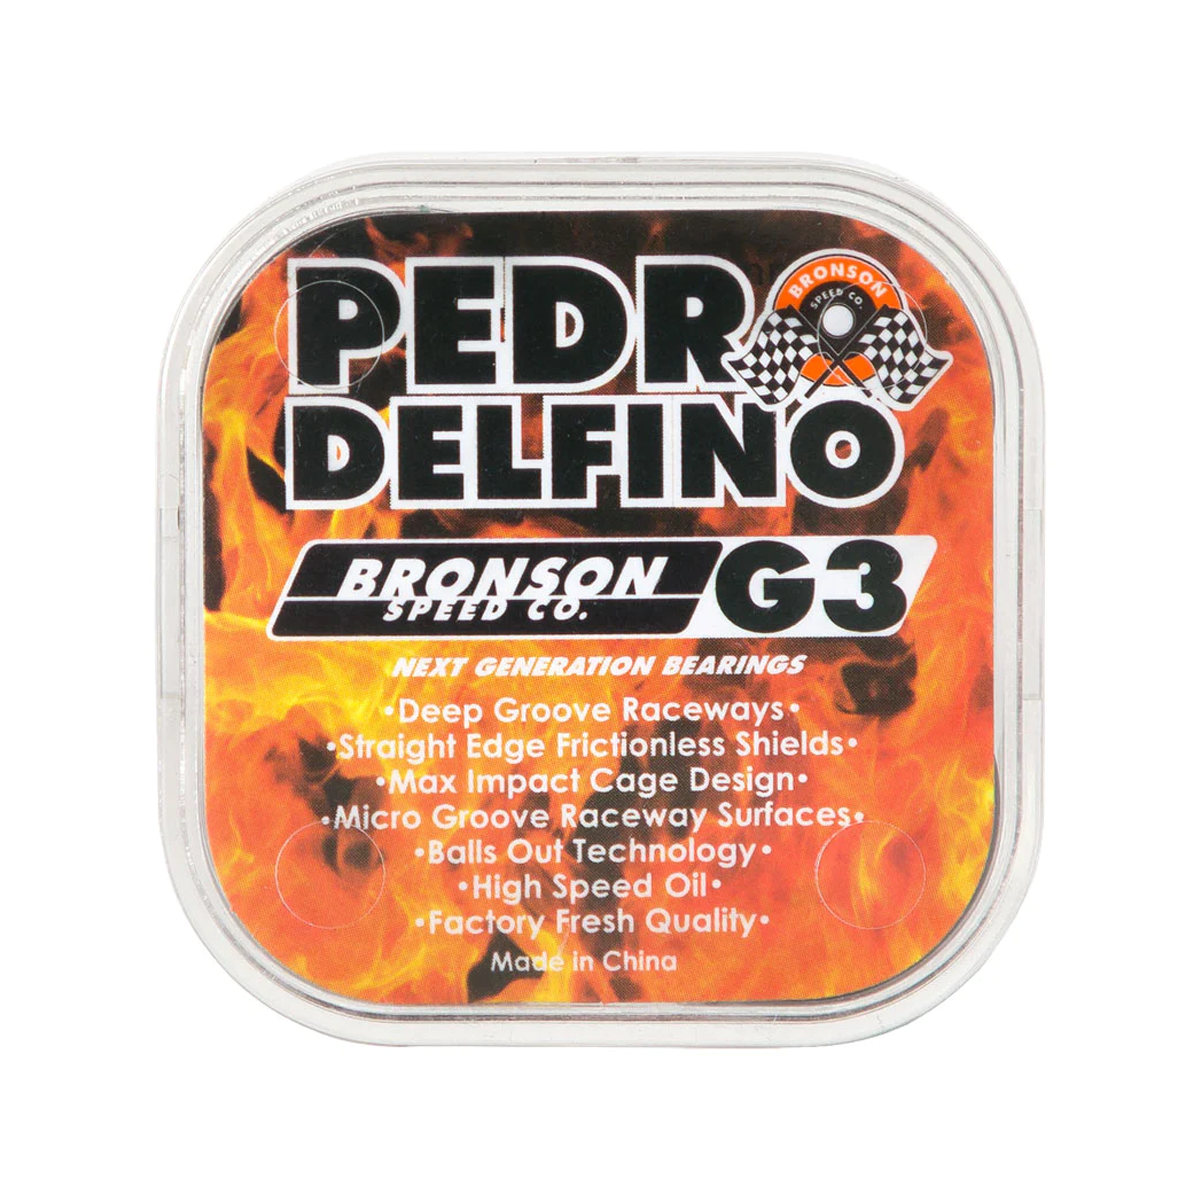 Bronson G3 Pedro Delfino Pro Skate Bearings